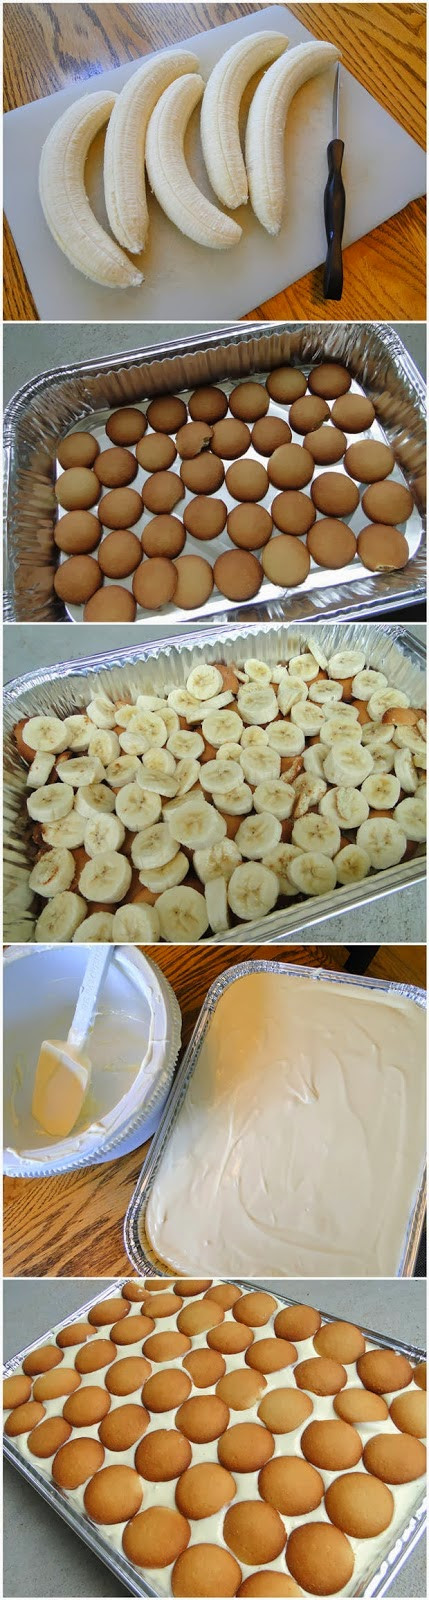 Banana Pudding With Chessmen Cookies Recipe
 Not Yo Mama s Banana Pudding